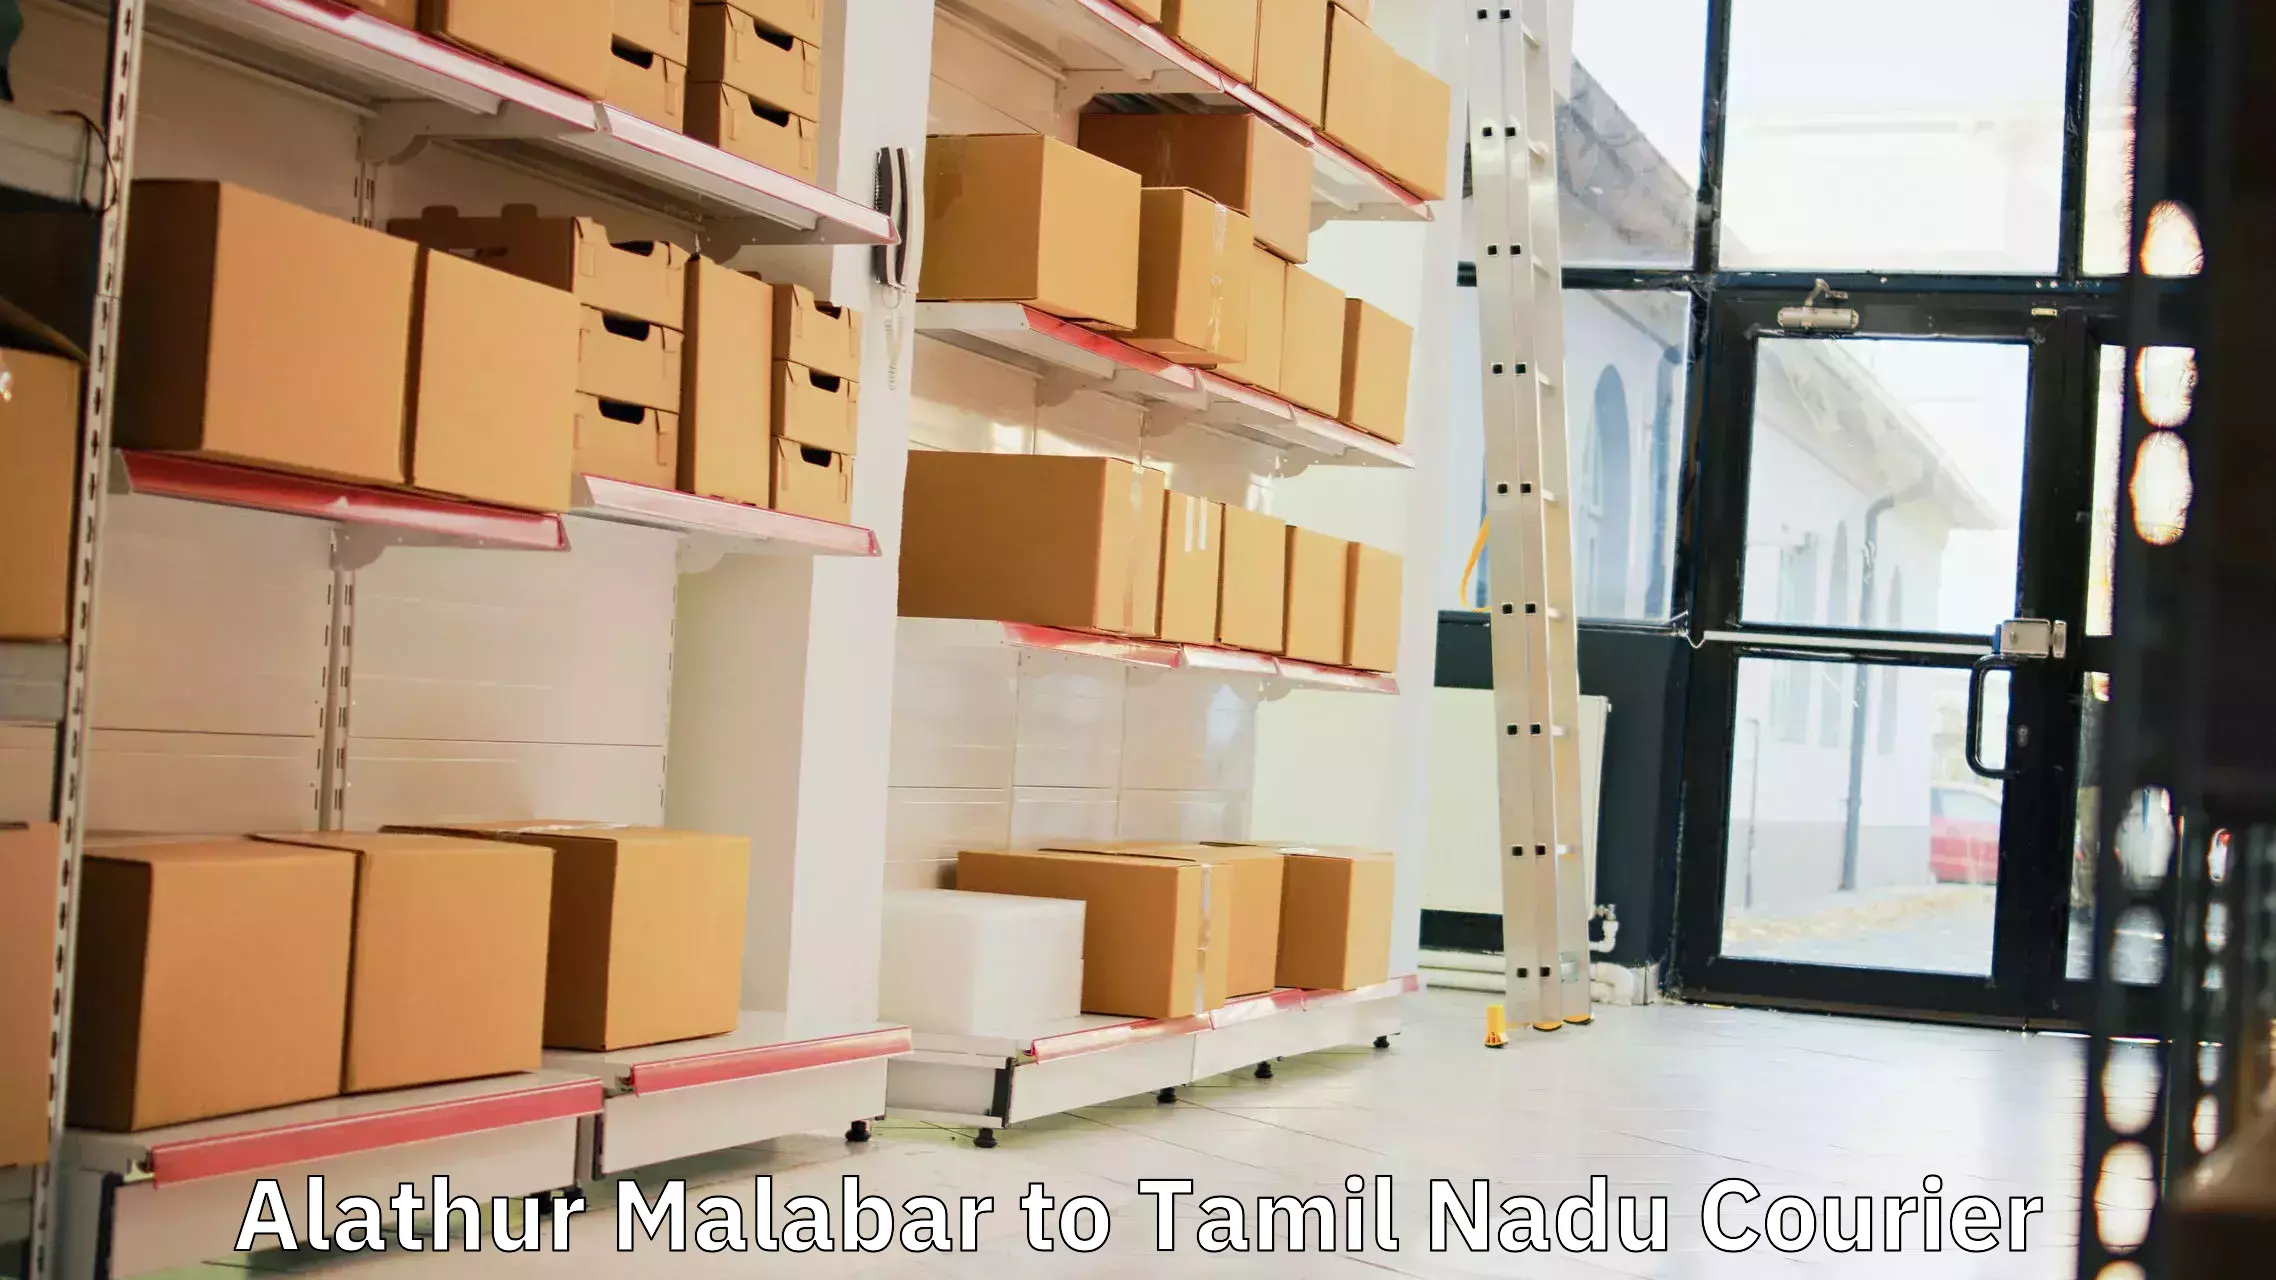 Easy access courier services Alathur Malabar to Gummidipoondi